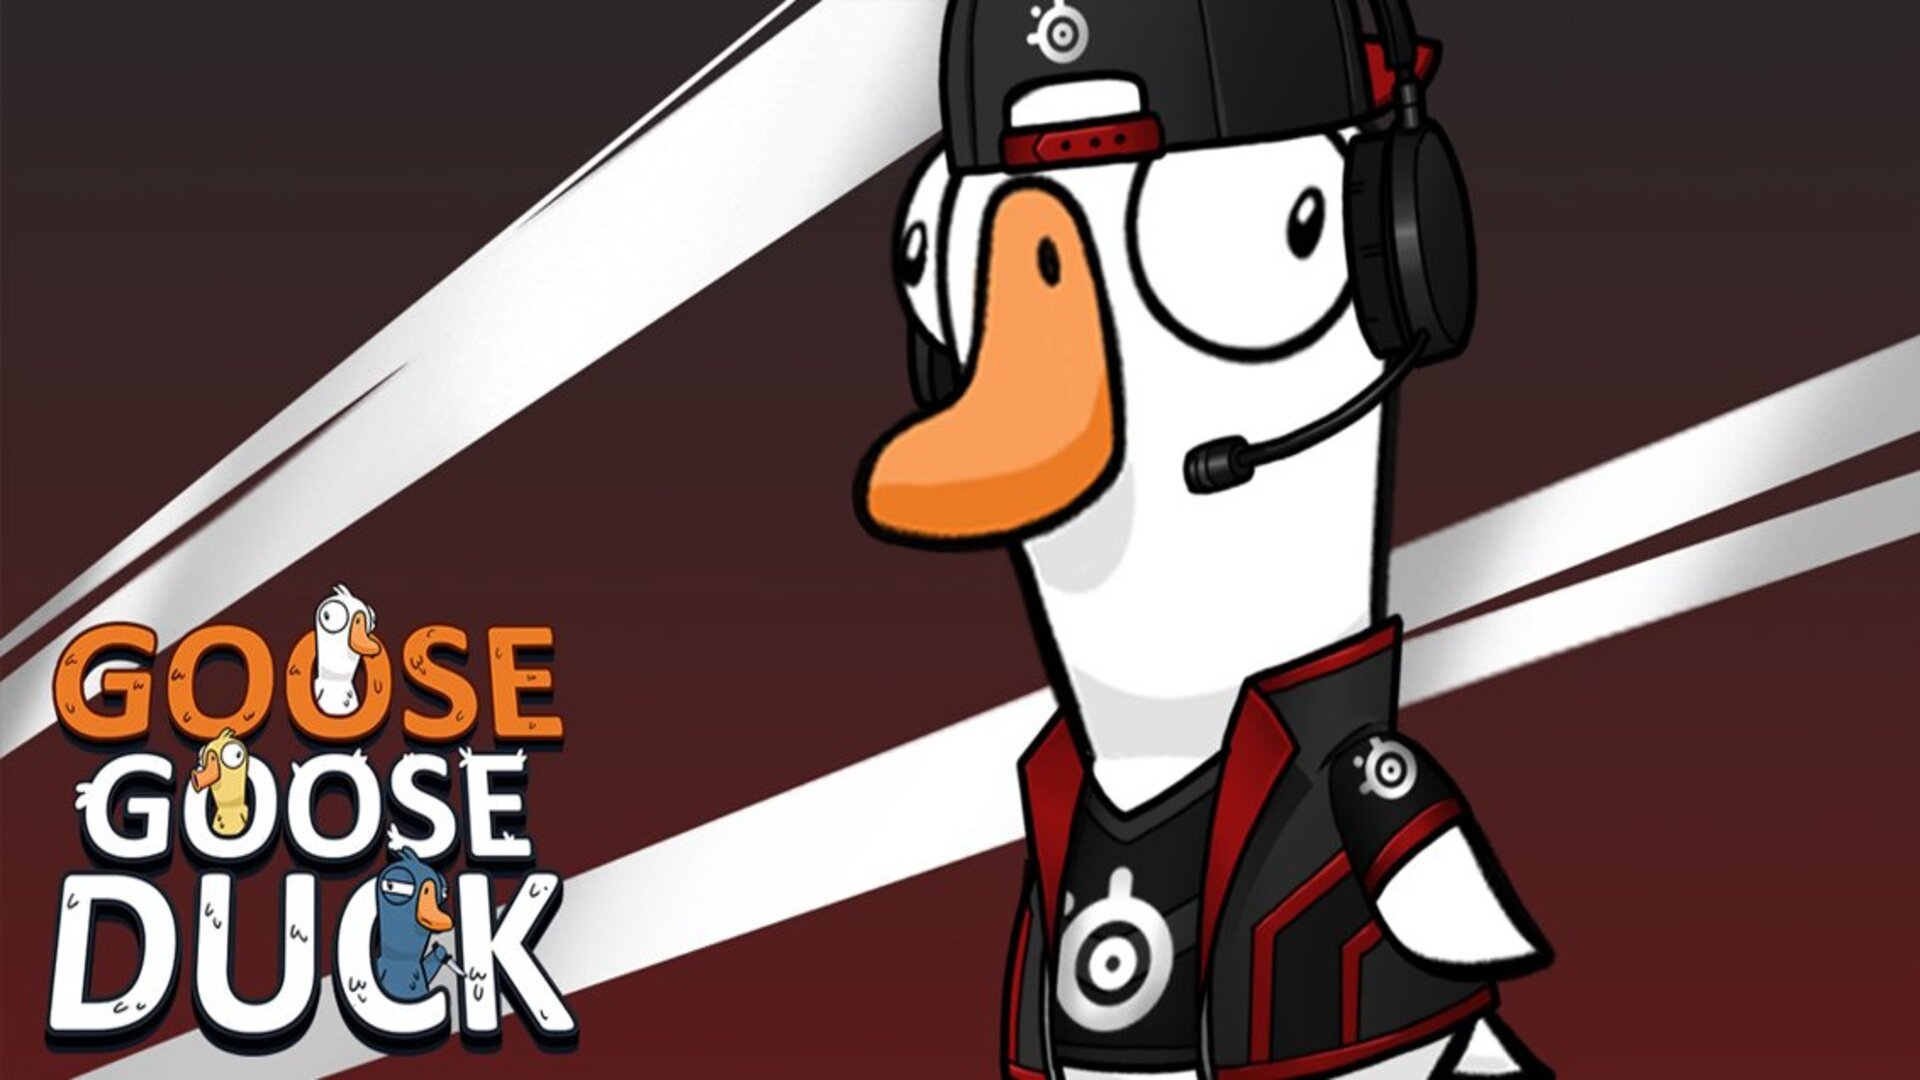 Goose Goose Duck - Steelseries Outfit Pack Digital Download CD Key $3.79